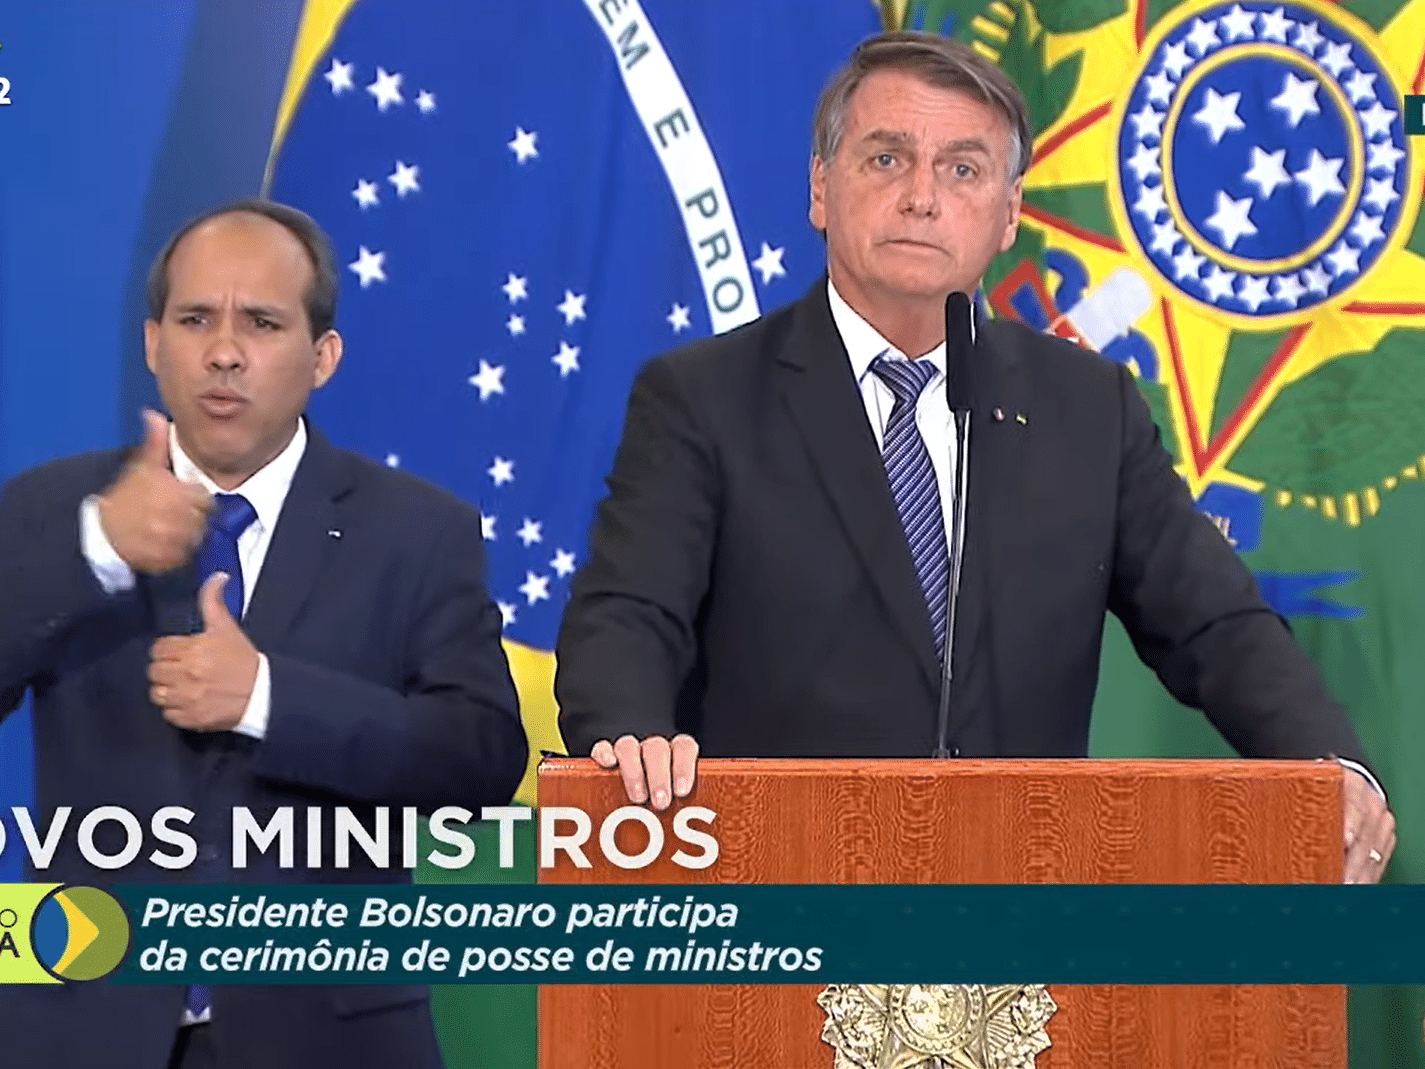 Jogo de terror tem como objetivo fugir de Bolsonaro